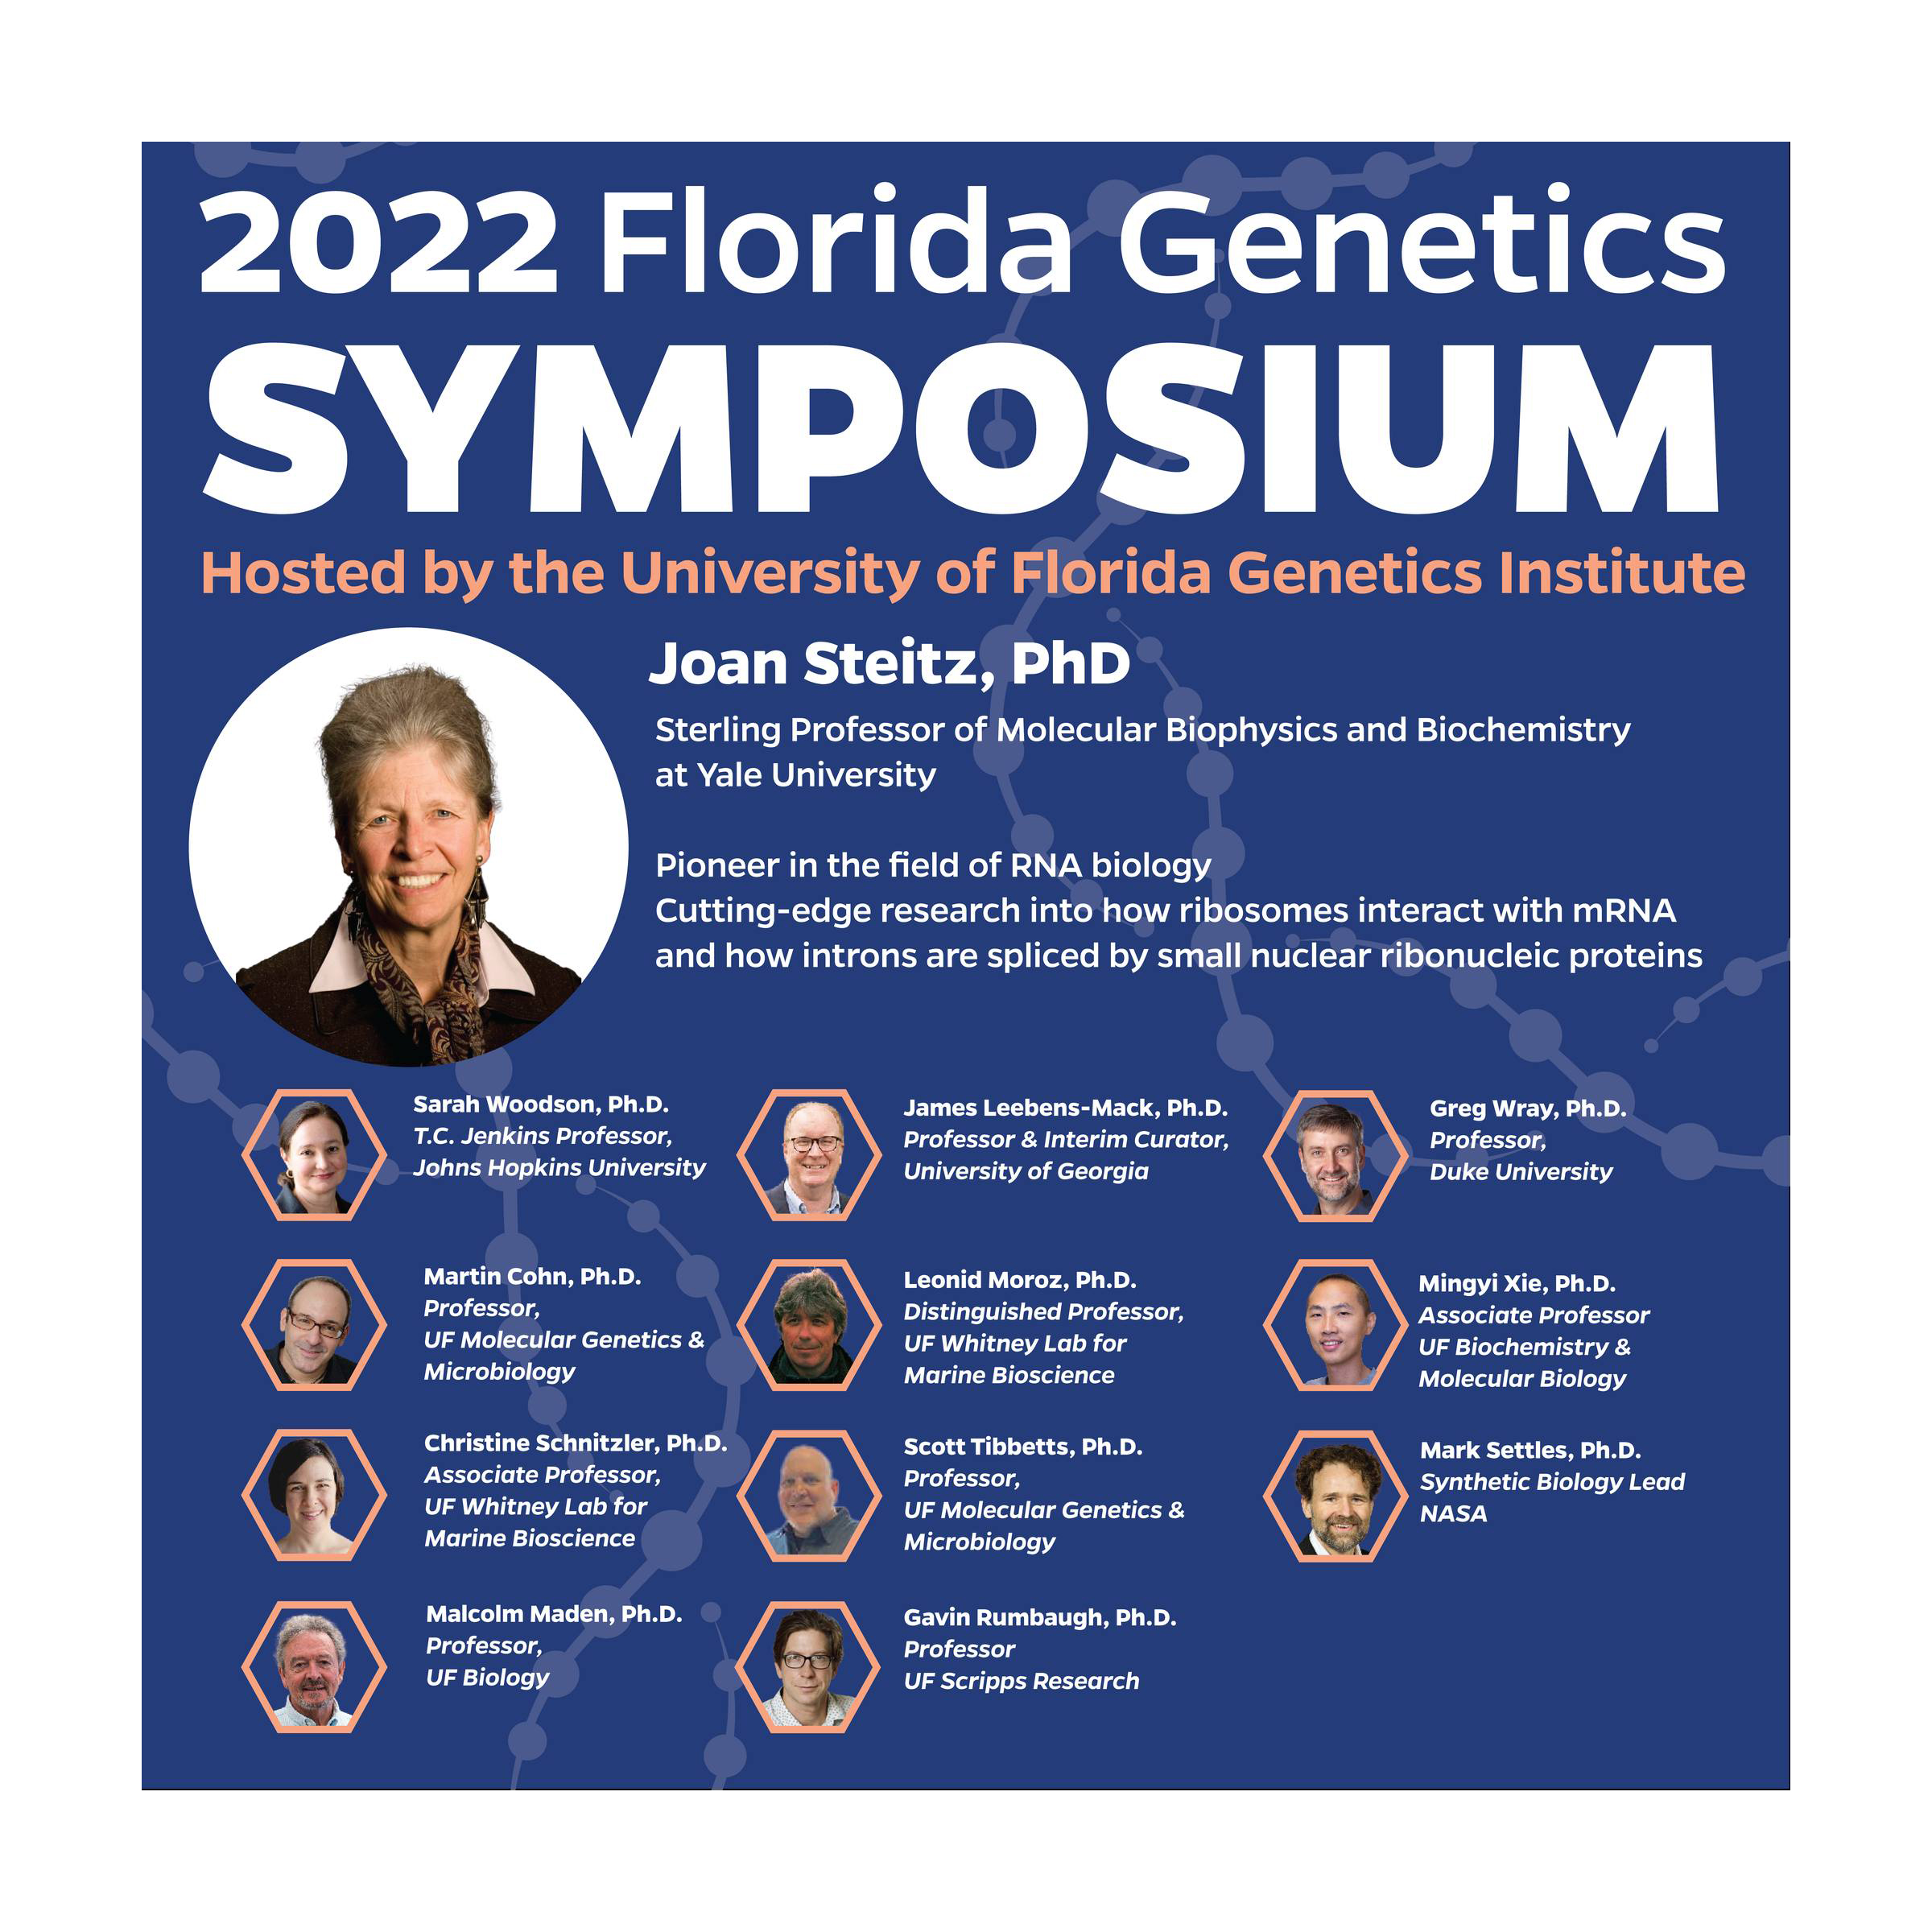 Dr. Schnitzler and Dr. Moroz to Speak at the Florida Genetics Symposium